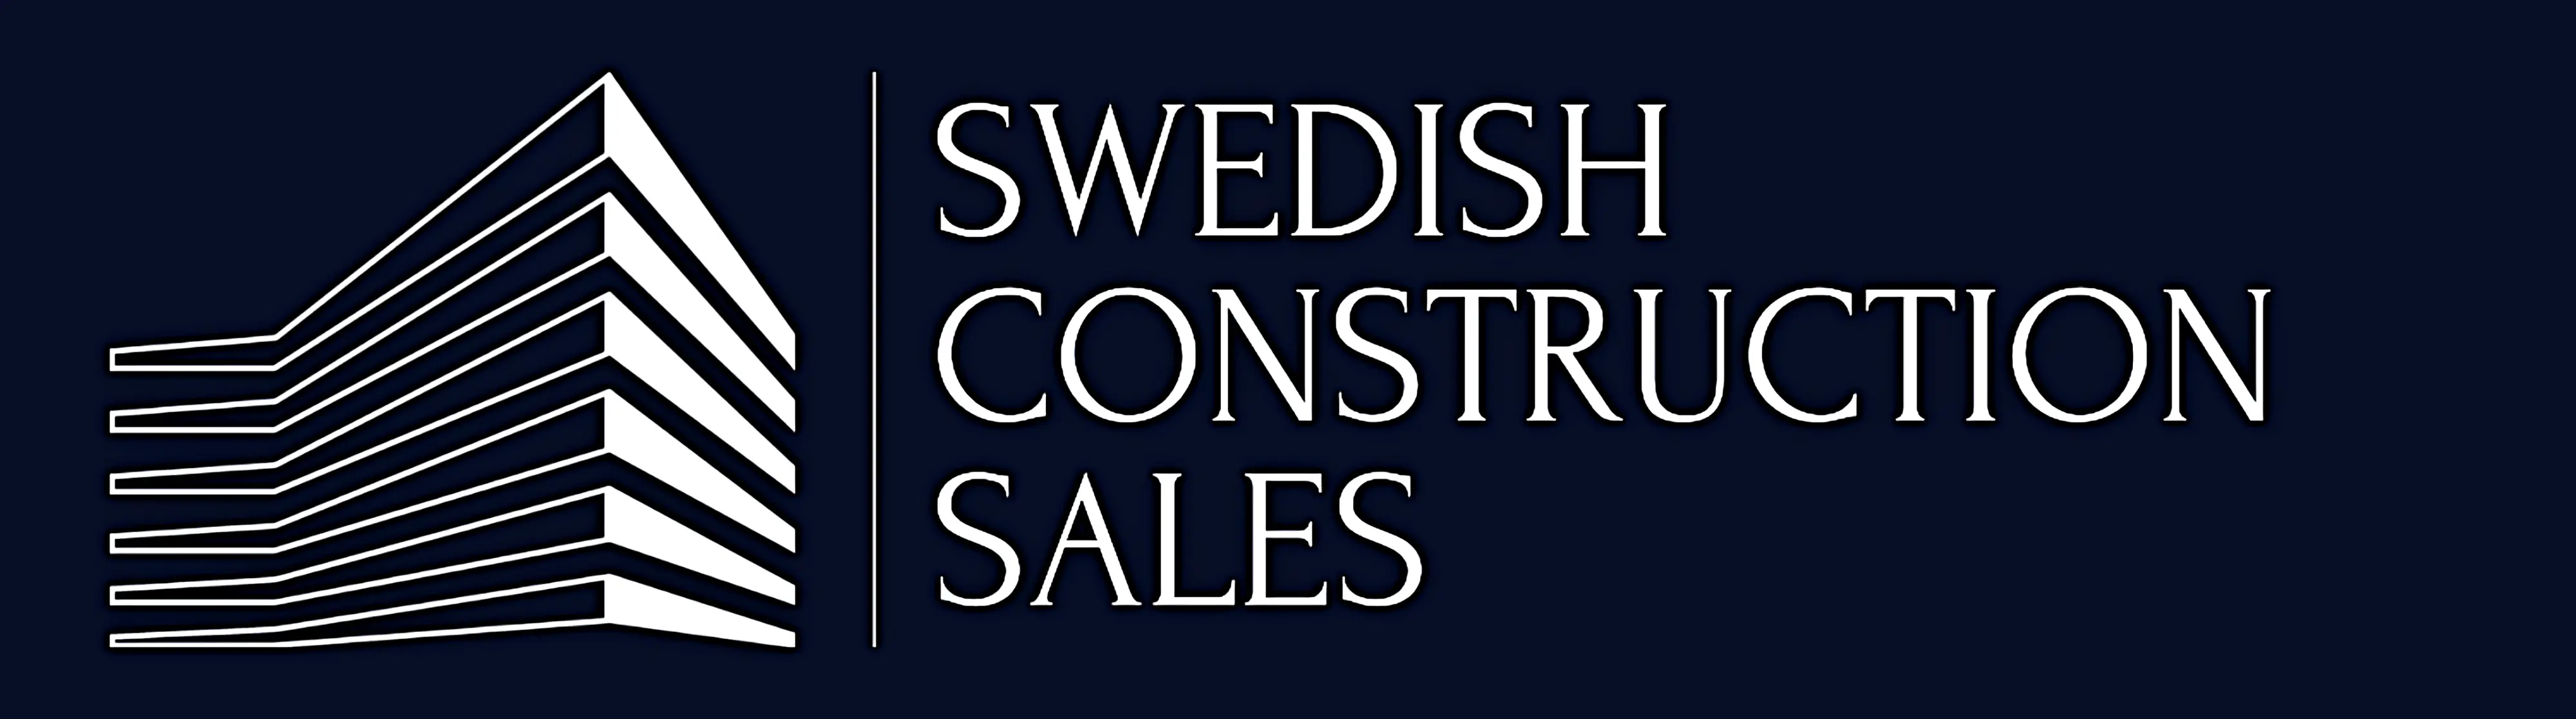 Swedish construction sales logo 